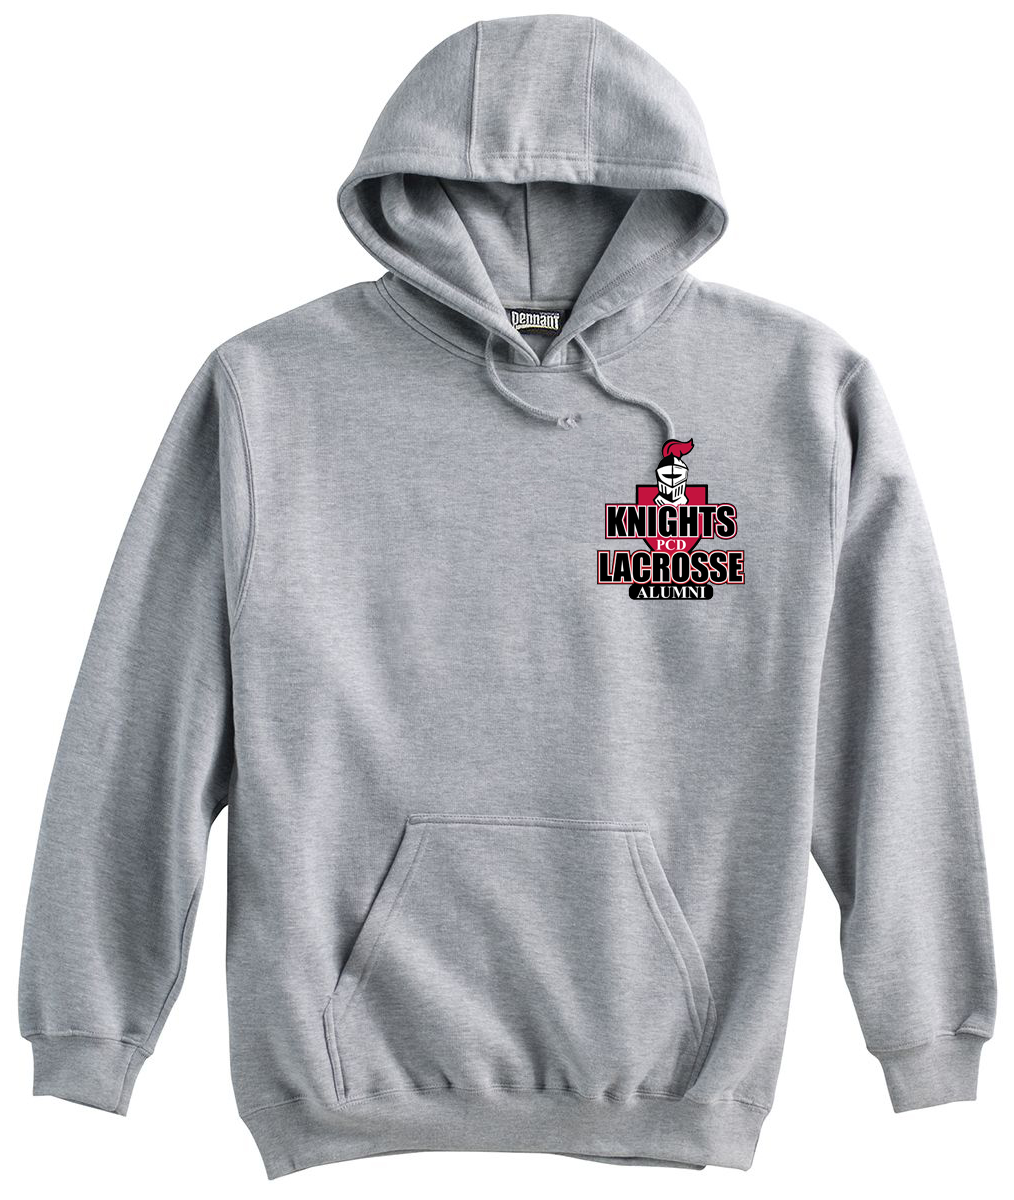 PCD Lacrosse Alumni Grey Sweatshirt